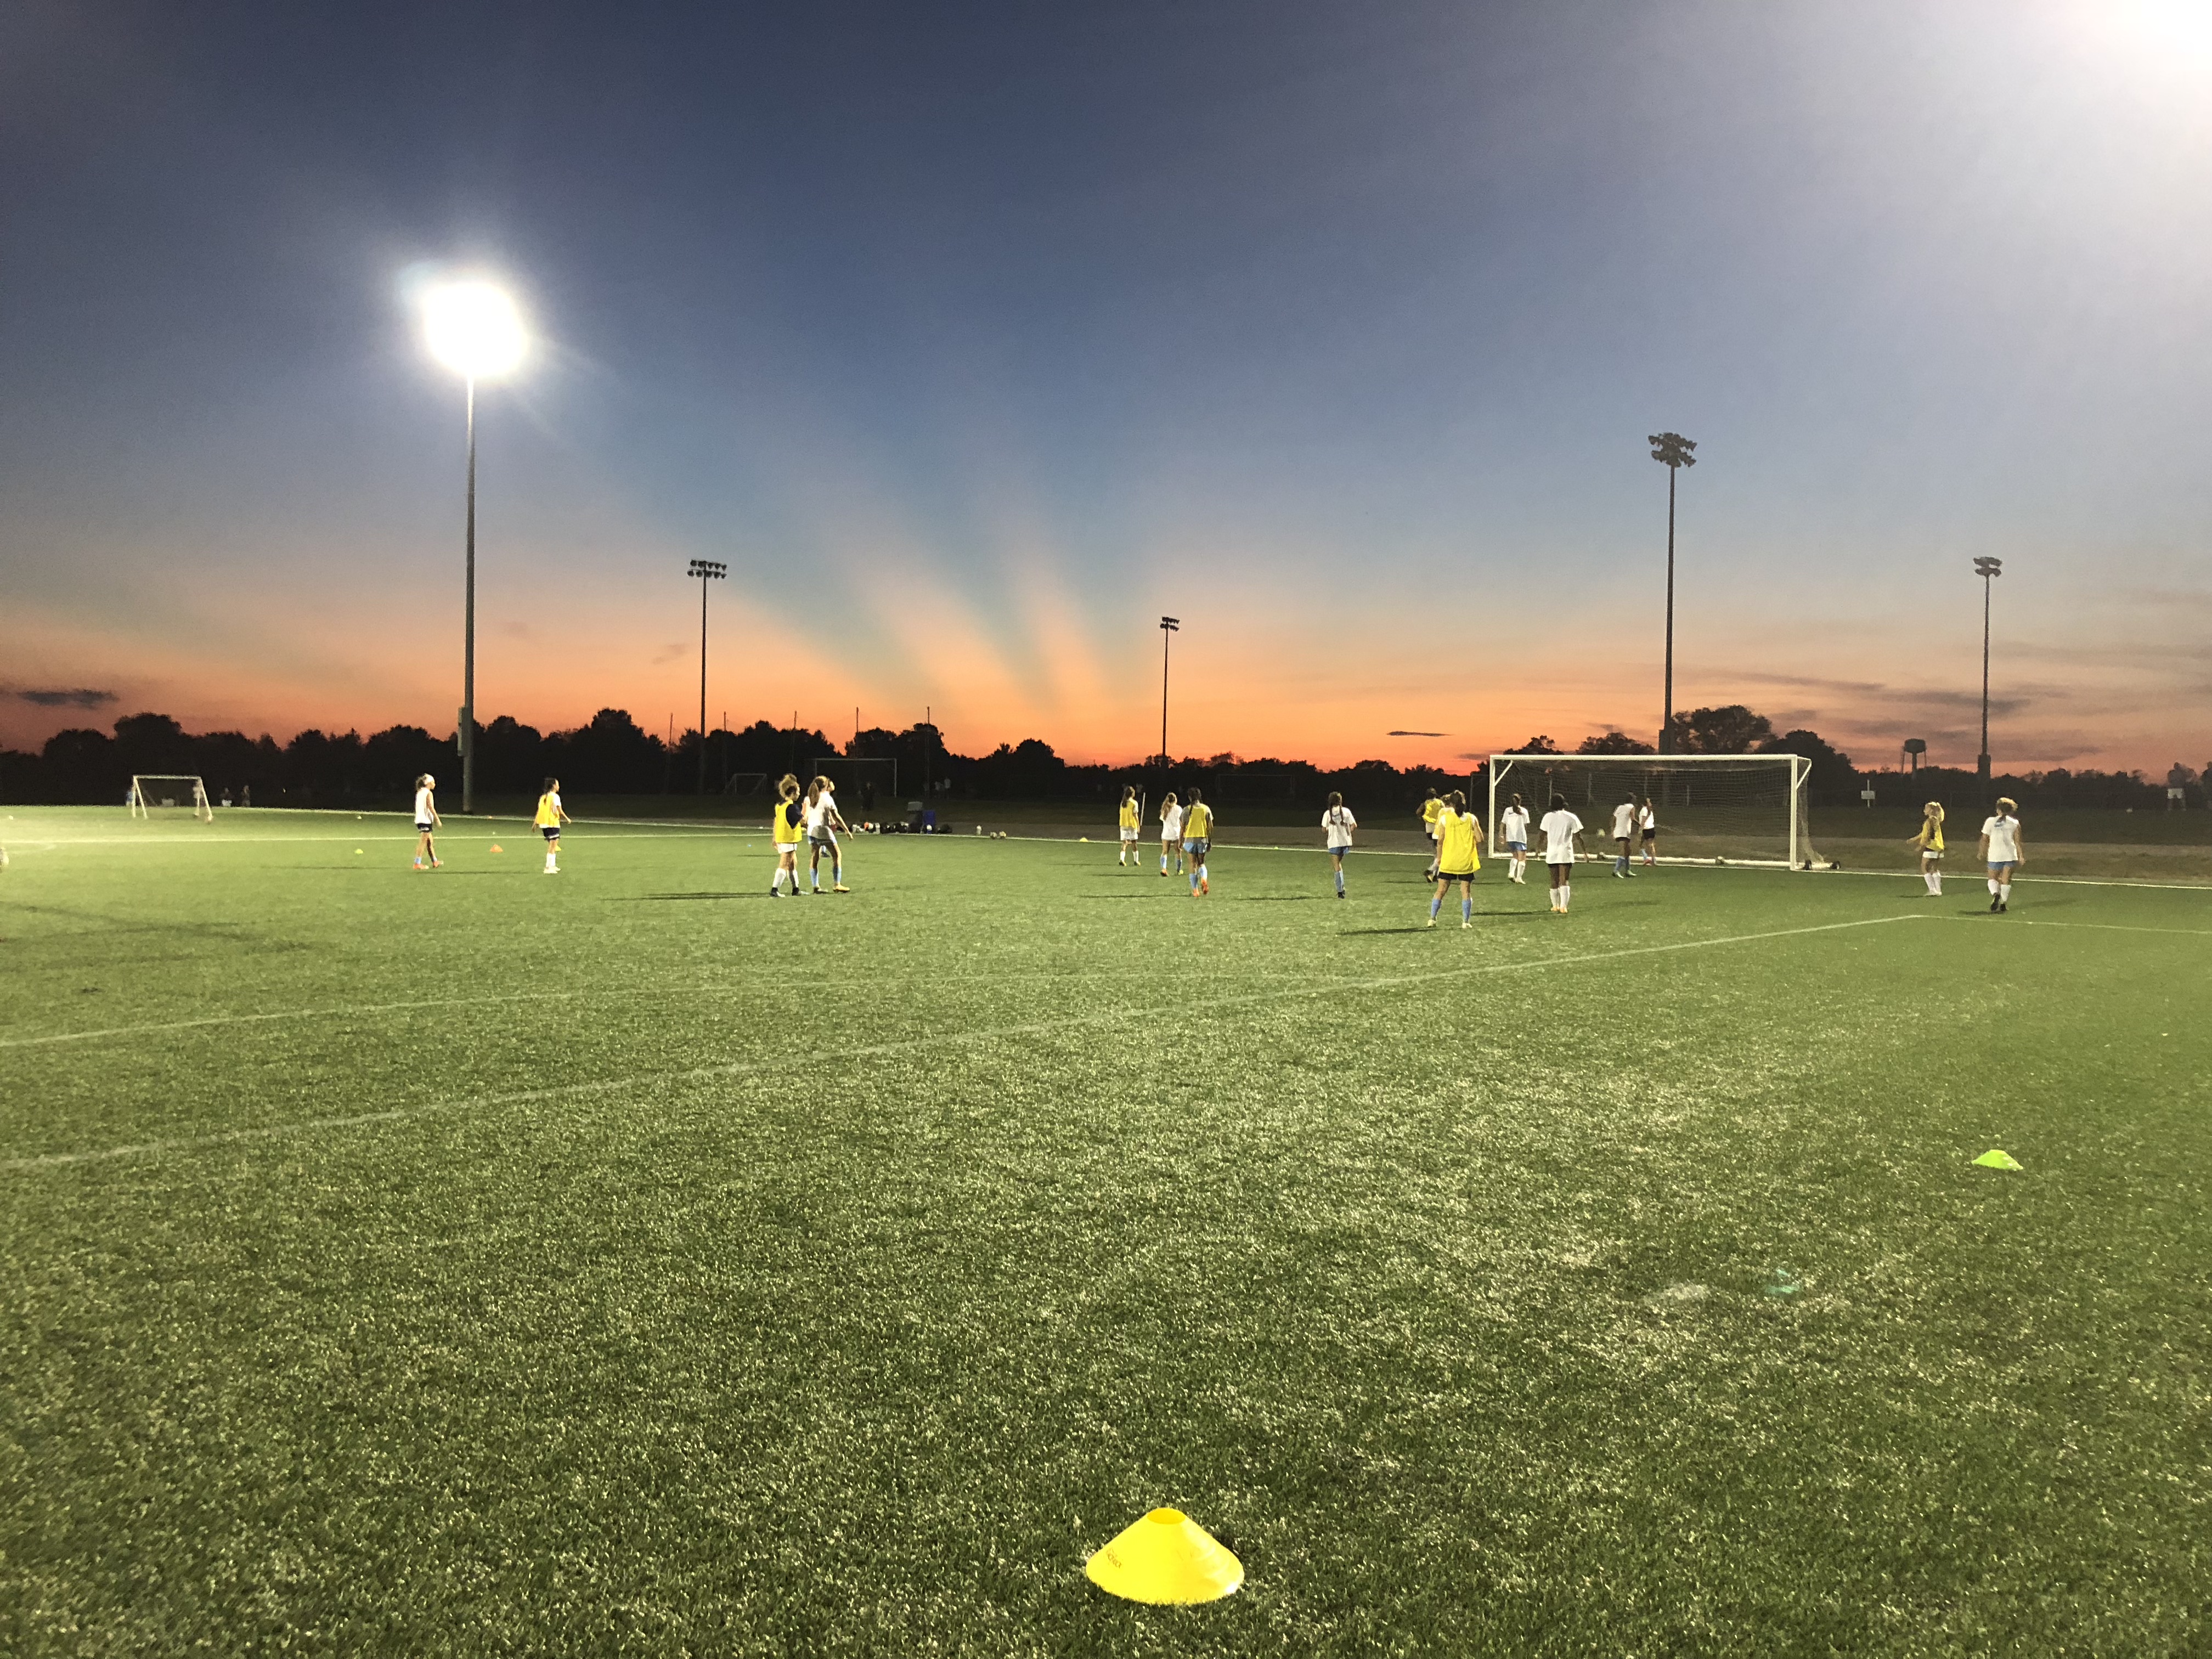 PDA Soccer Programs - Camps - Clinics | Players Development Academy
